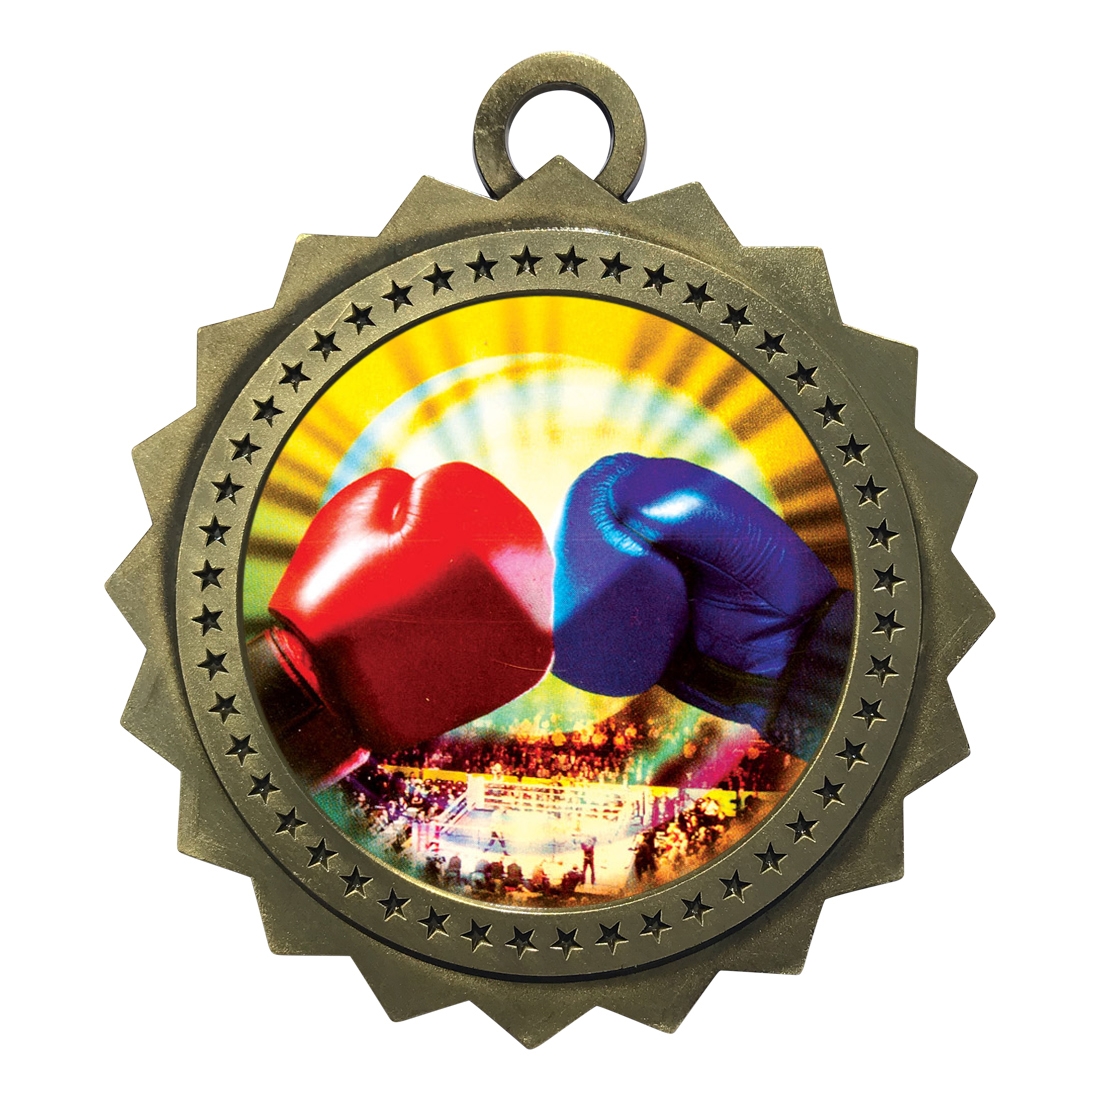 3" Boxing Medal